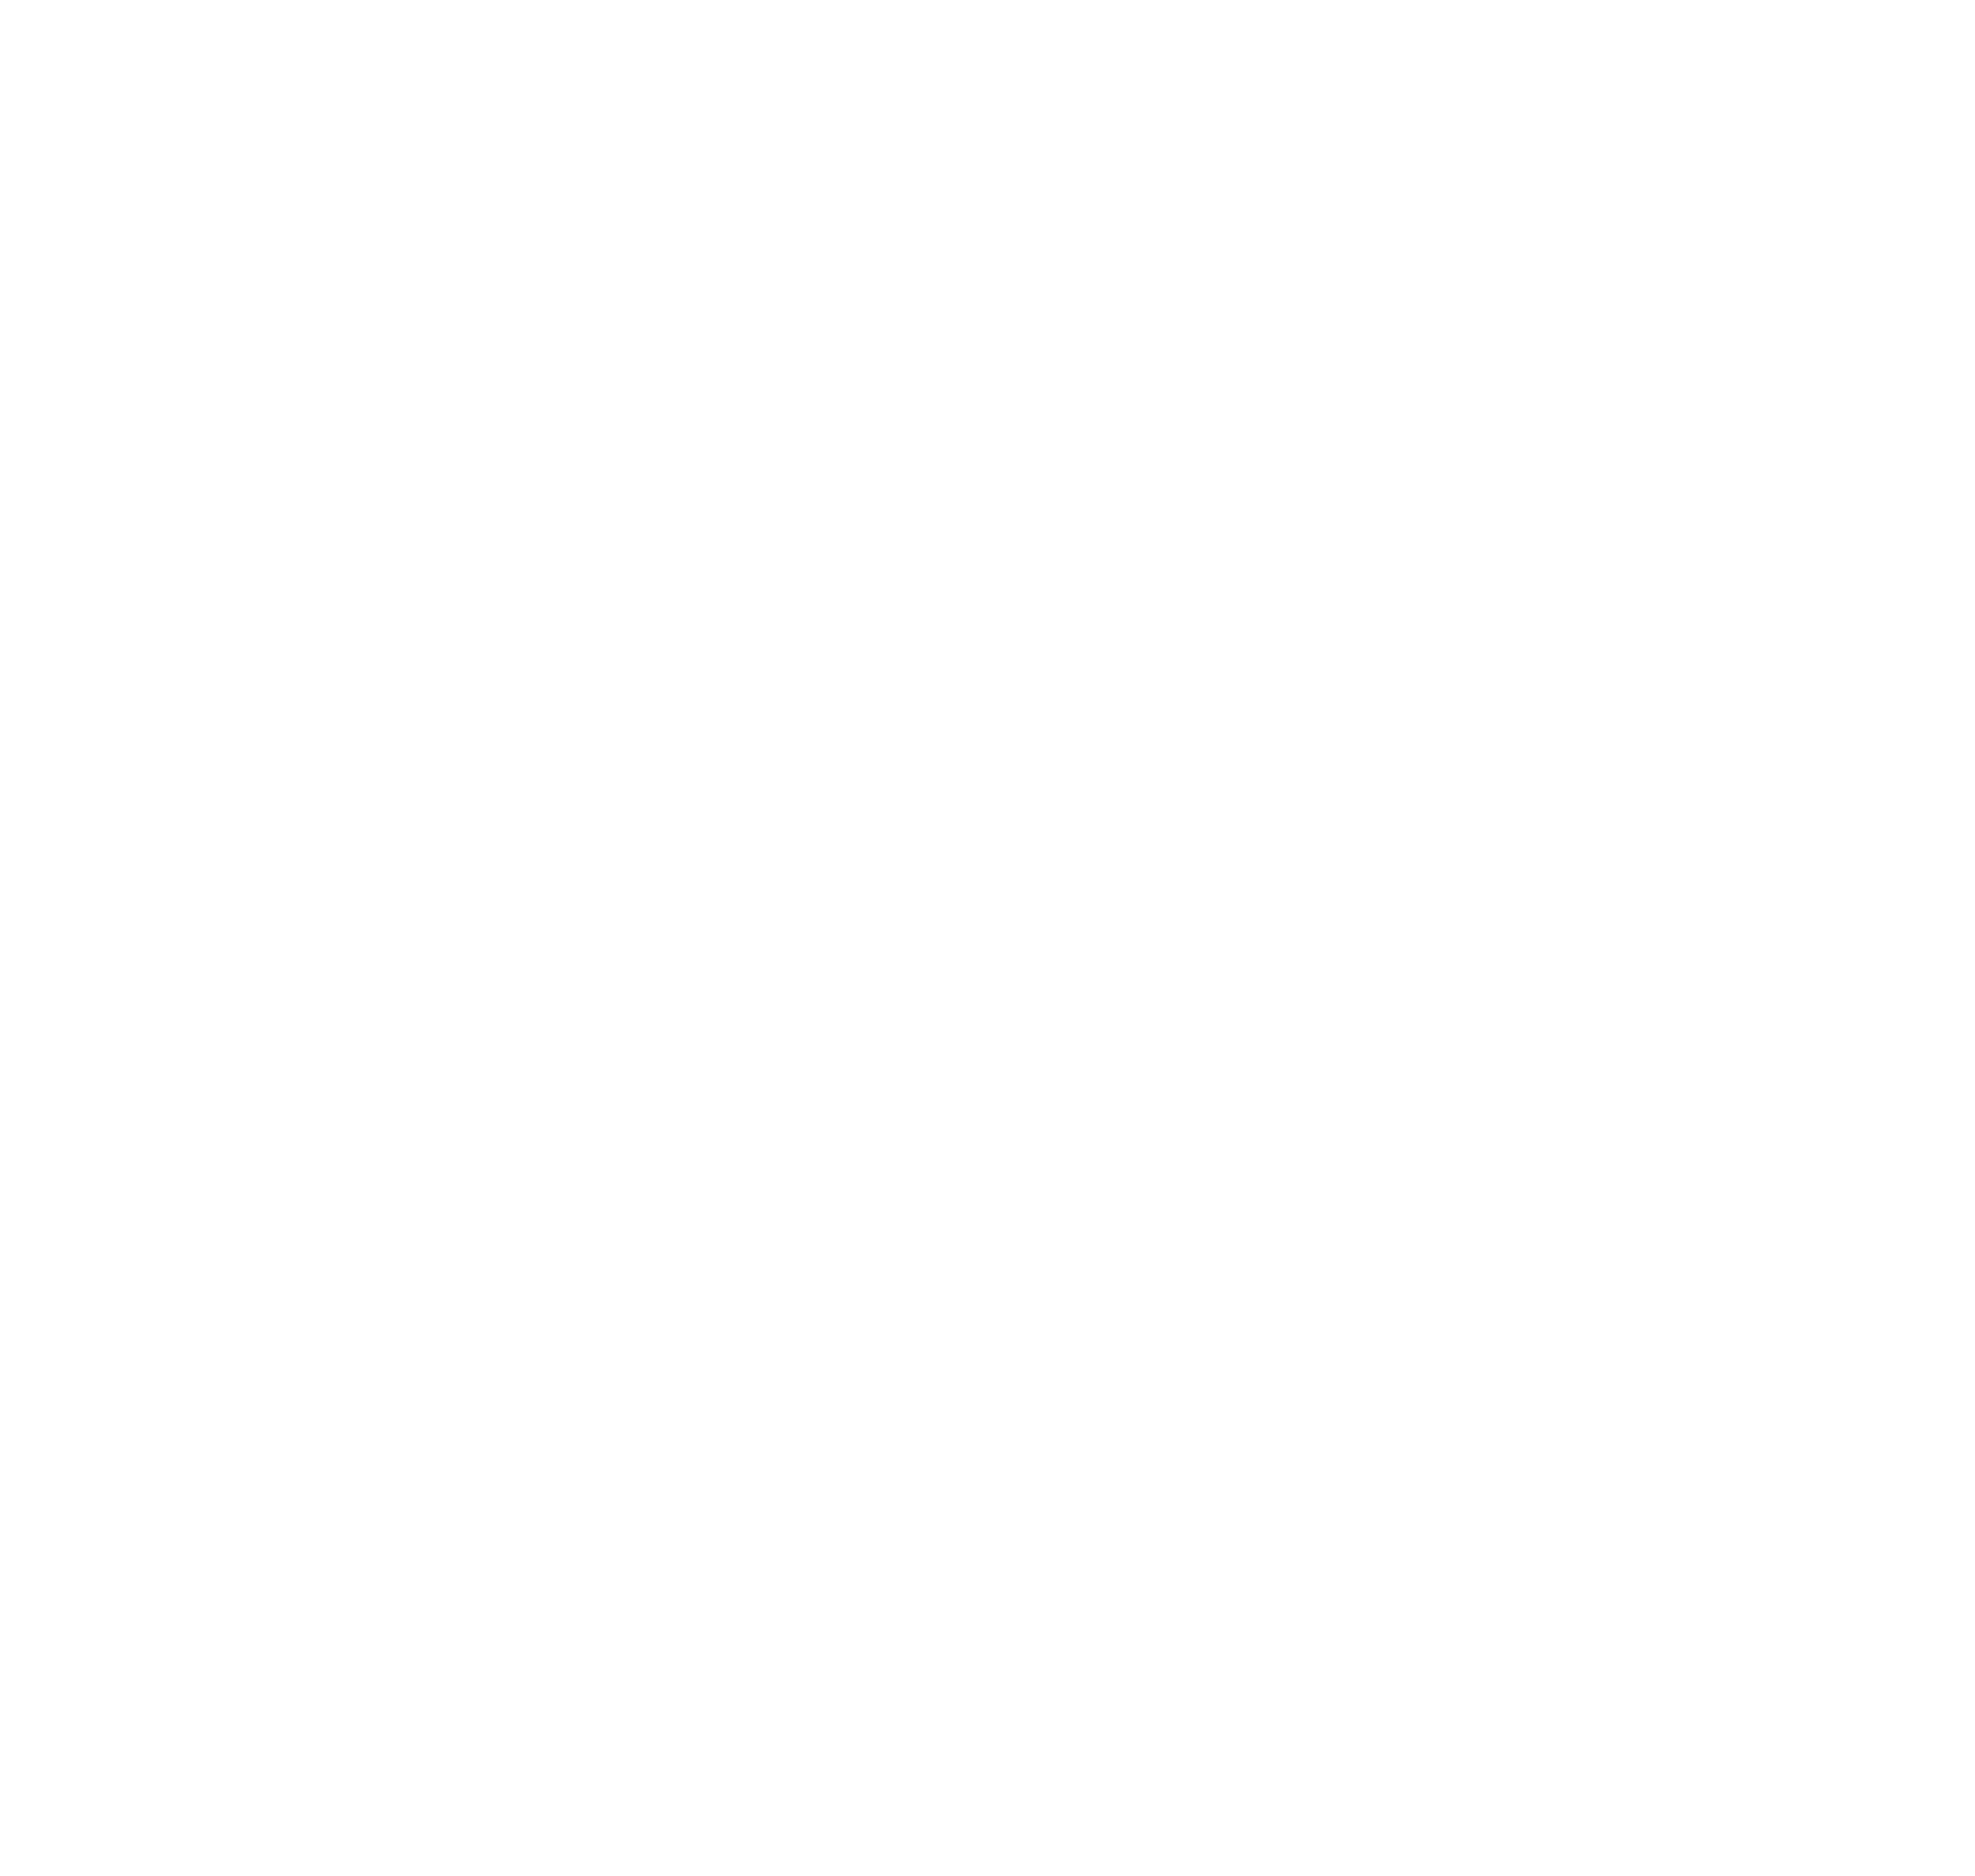 36 Champions League Png White - vrogue.co